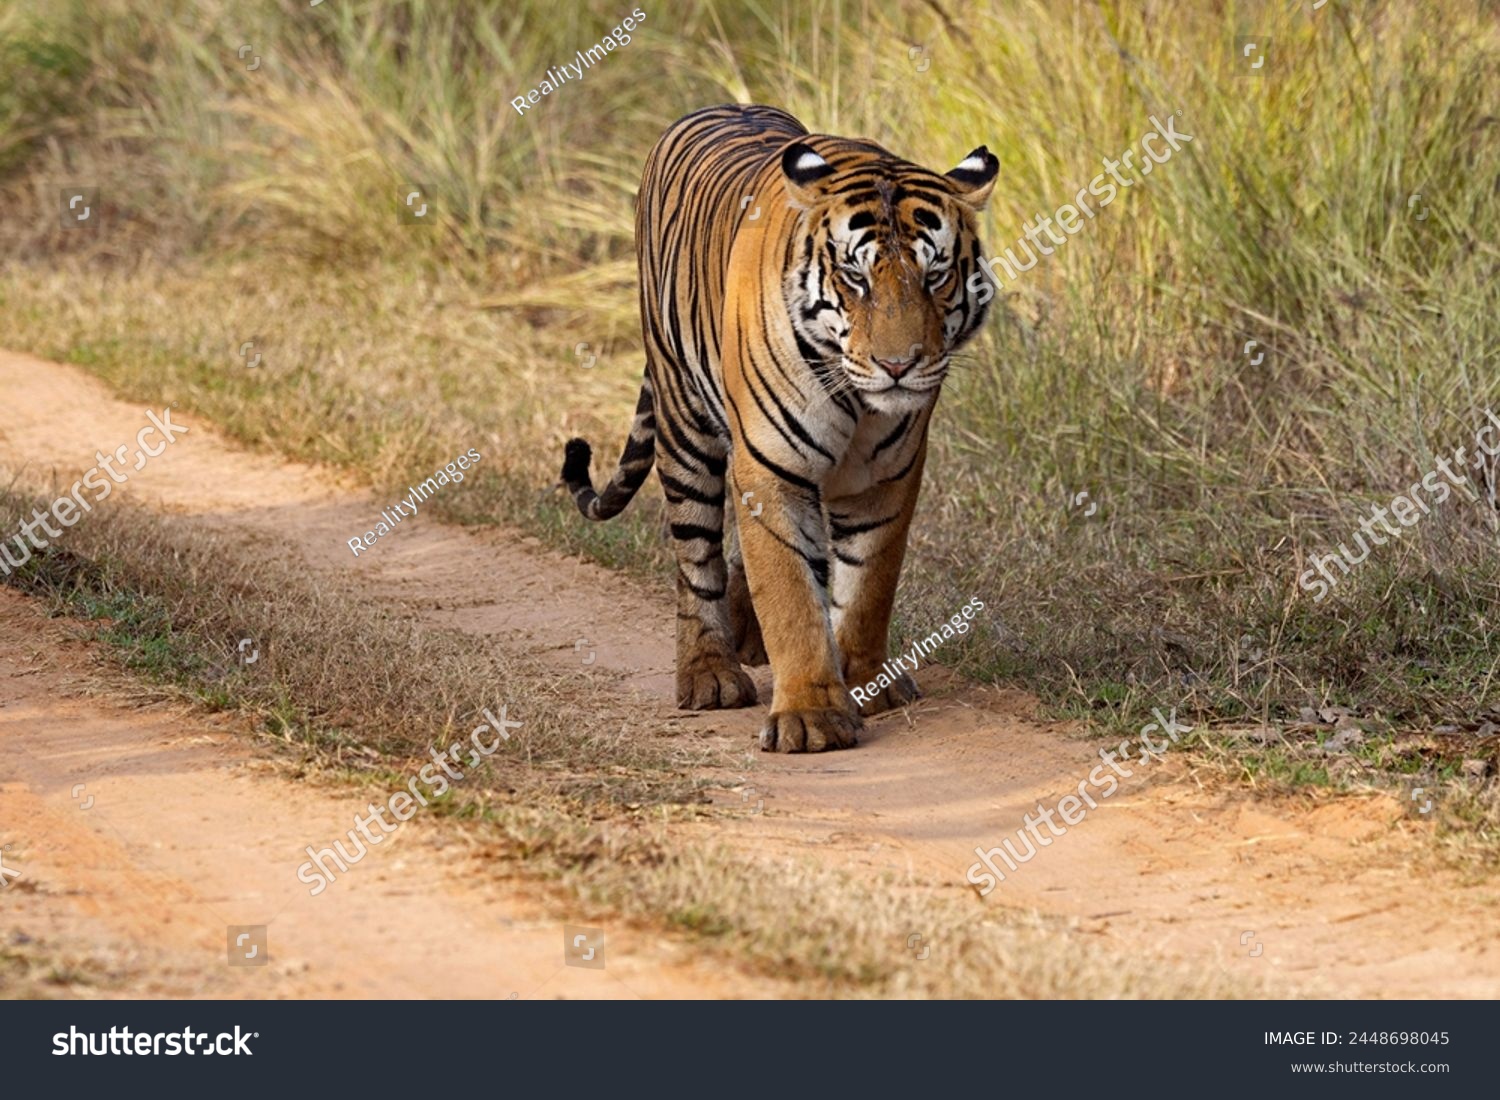 Royal Bengal Tiger, Panthera tigris, male, Panna Tiger Reserve, Madhya Pradesh, India #2448698045